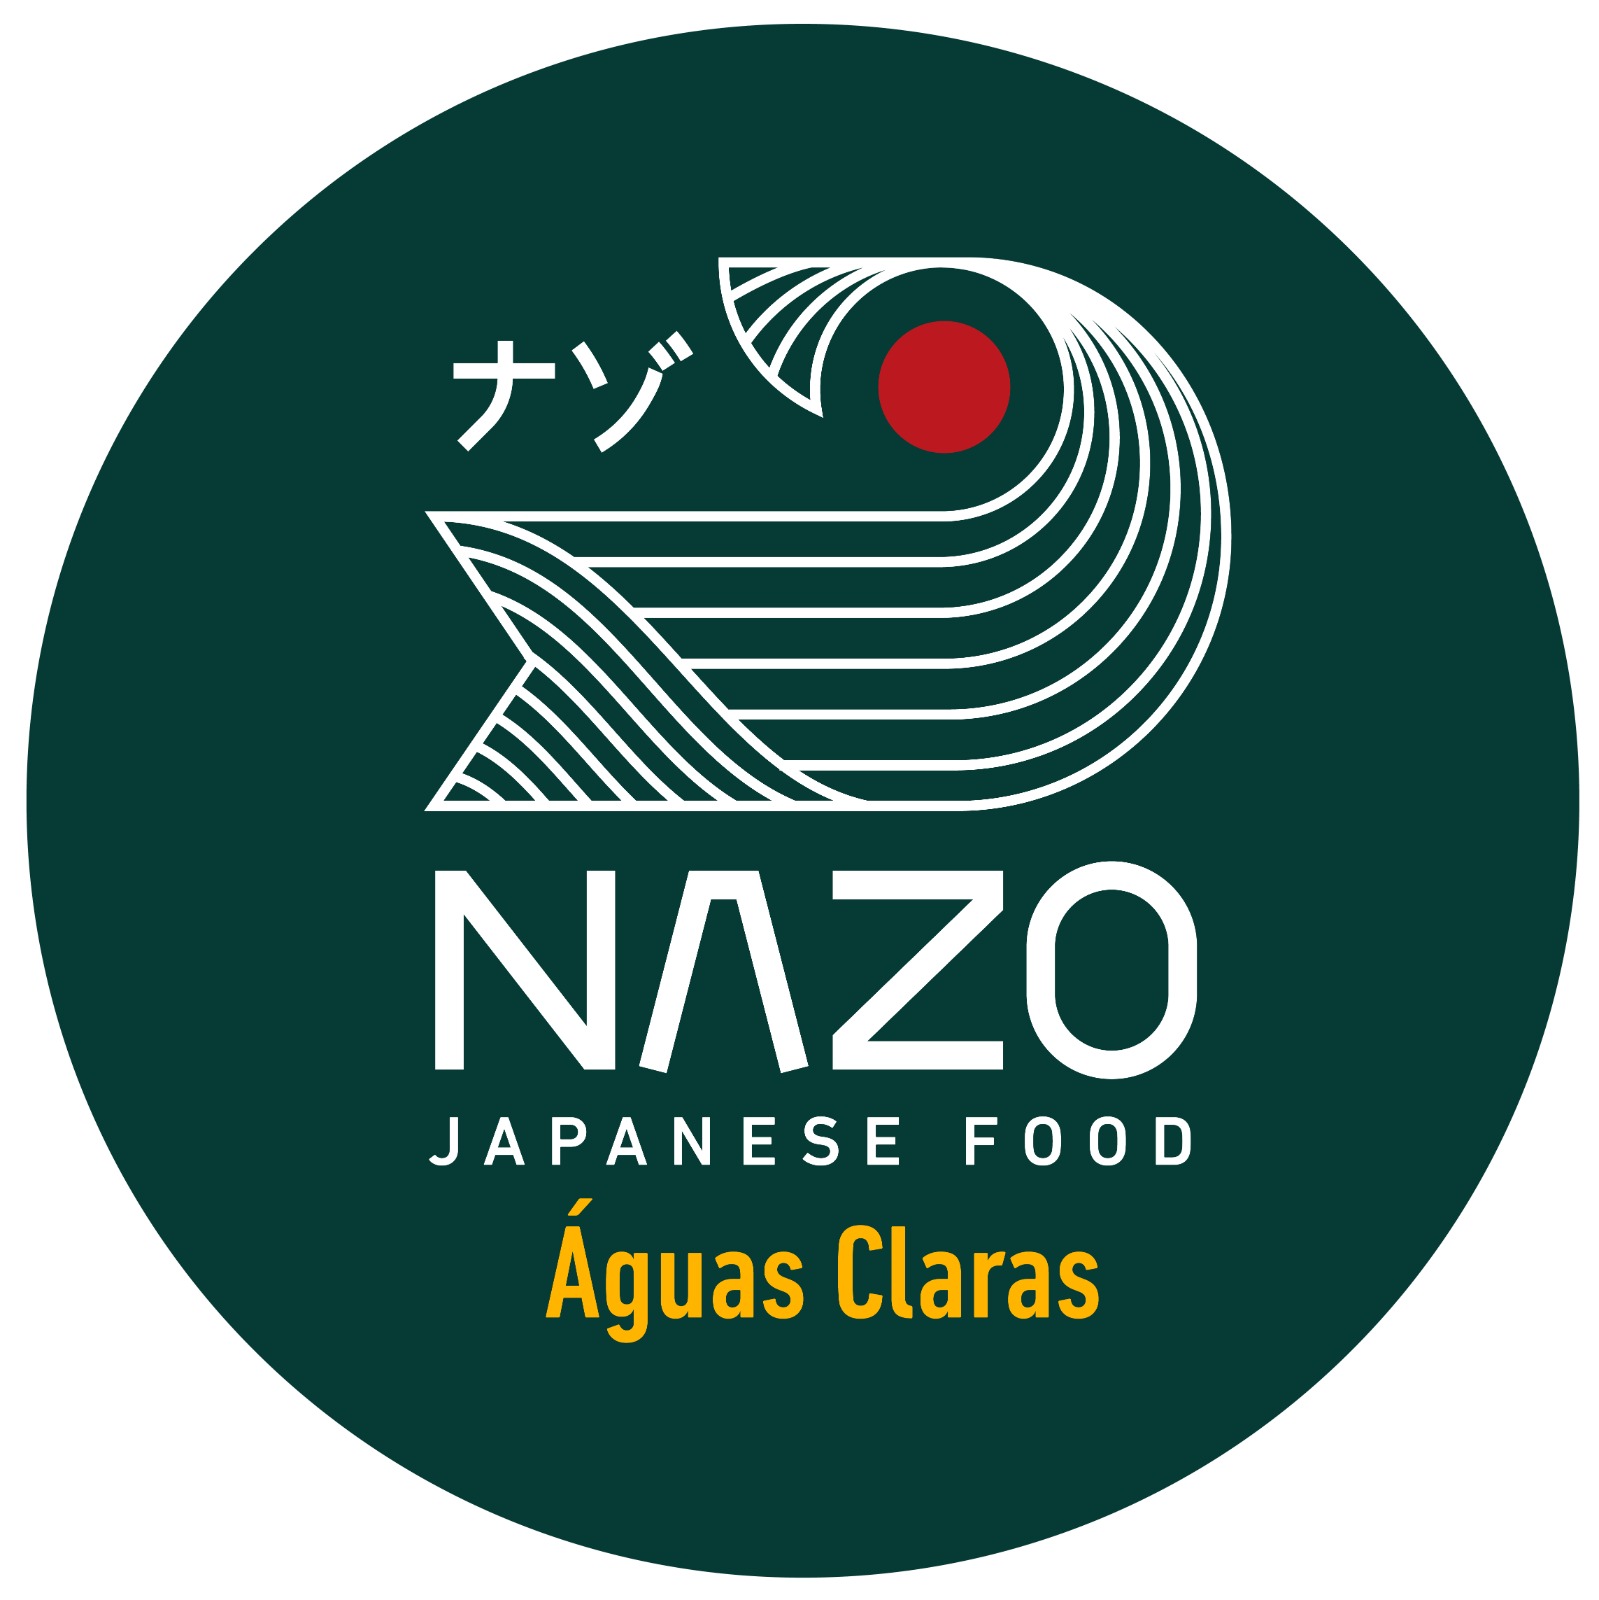 Nazo Japanese Food - Águas Claras